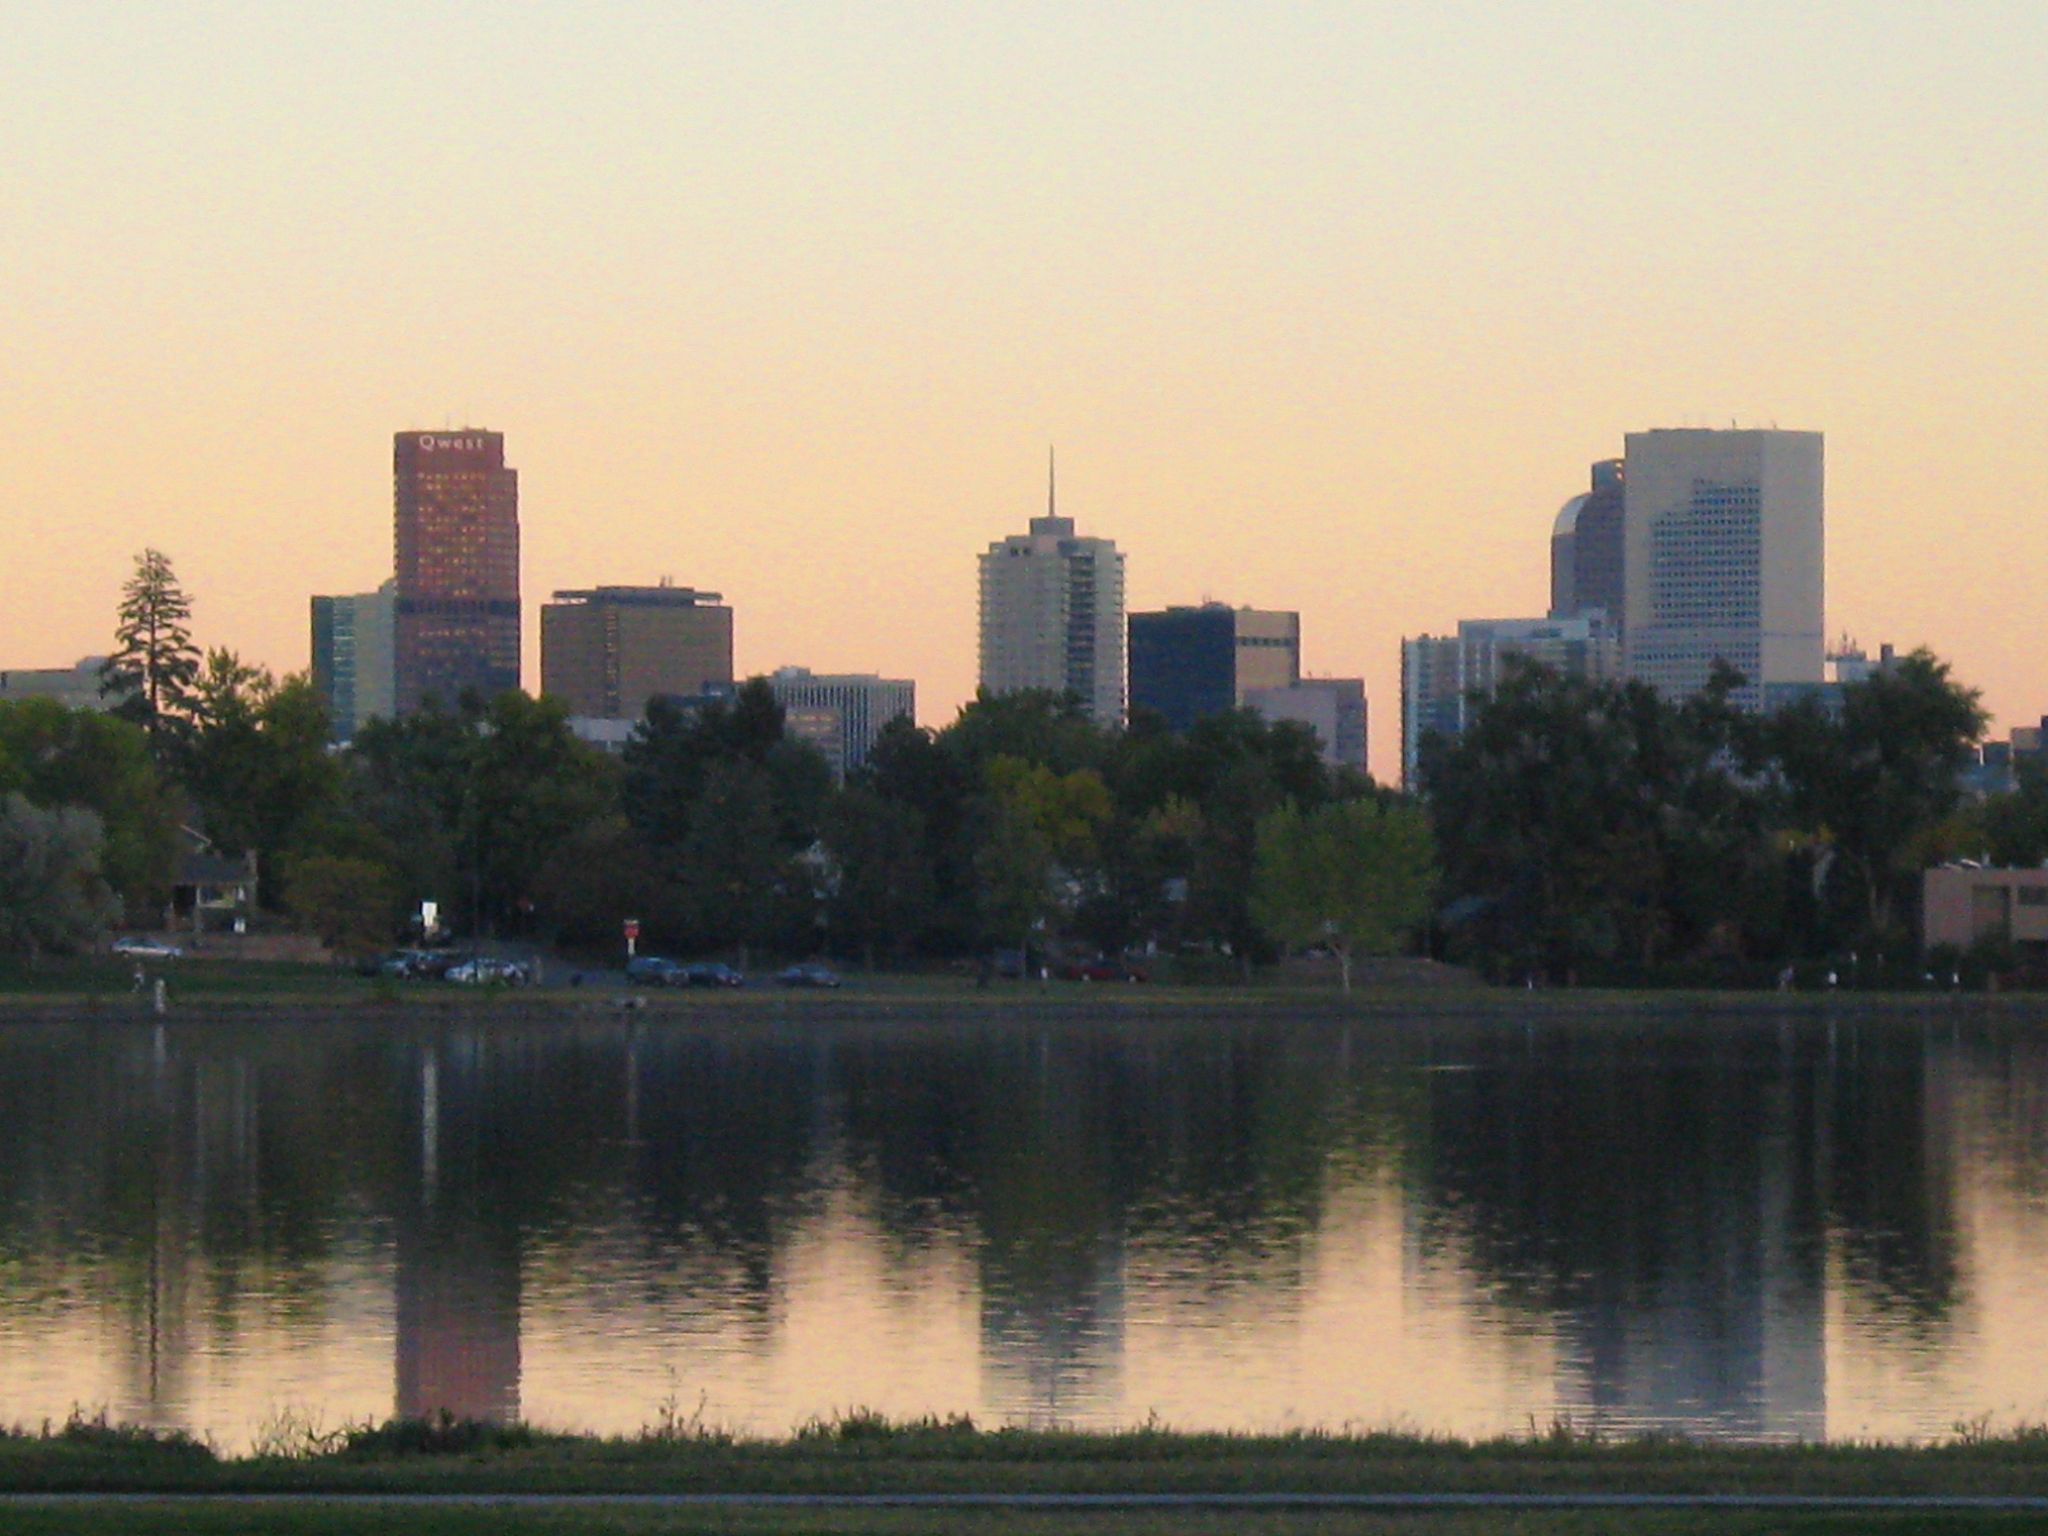 Looking across Sloan's Lake at Denver's skyline.